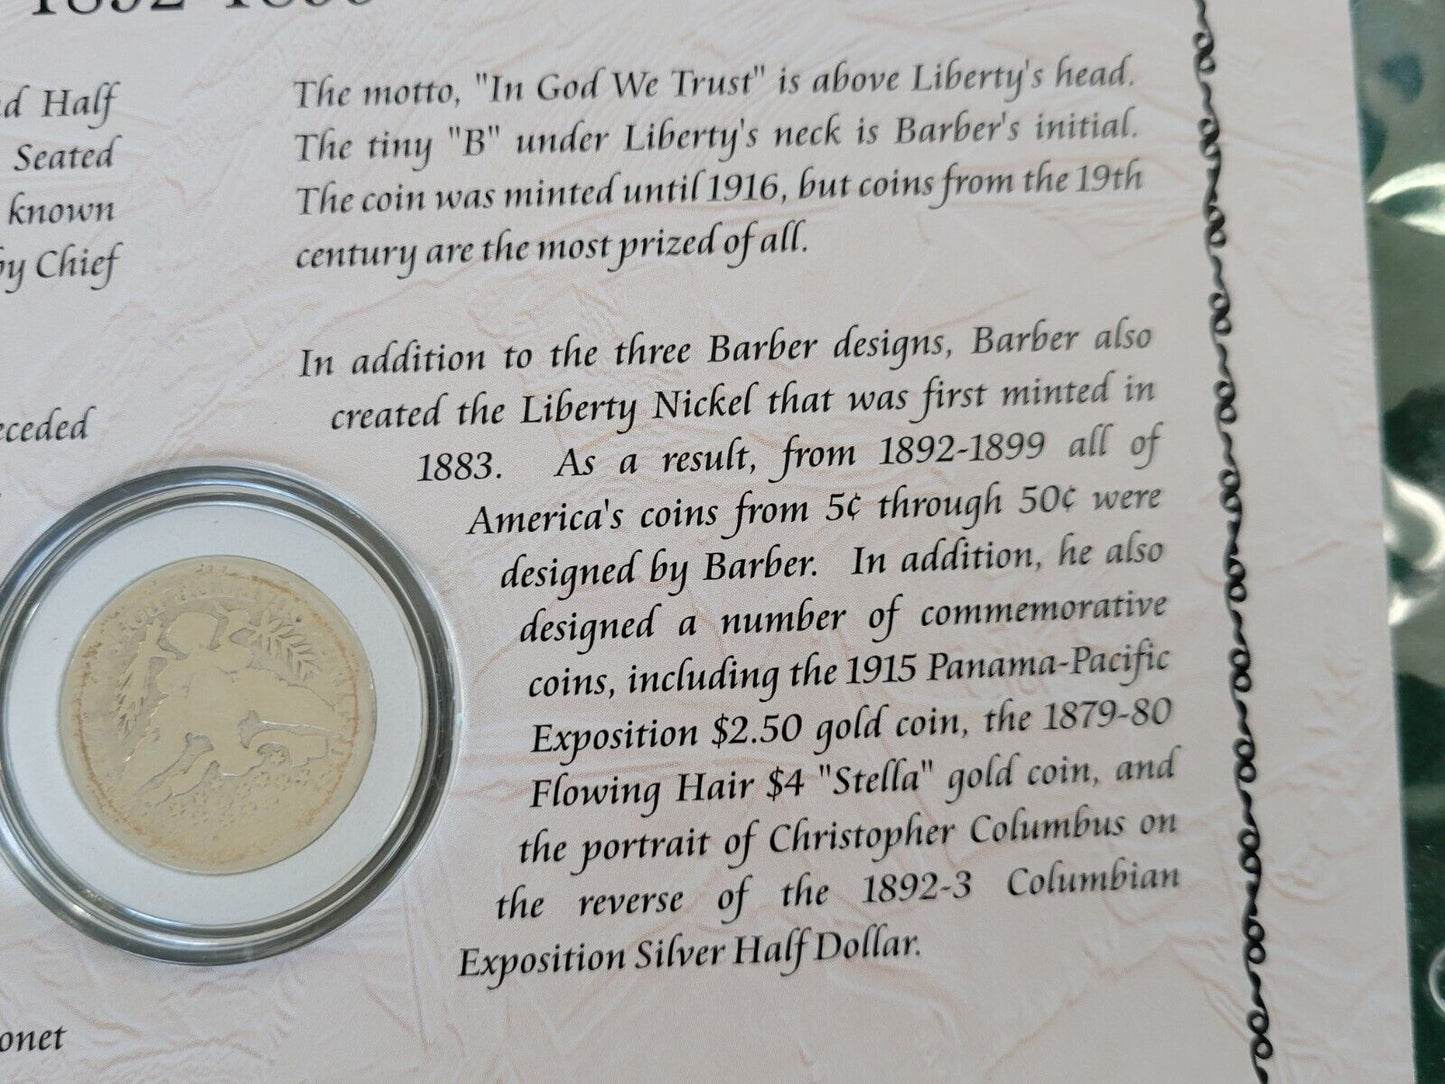 AMERICA'S Rare 19th Century Coins (Barber Silver Quarter 1892-1899)